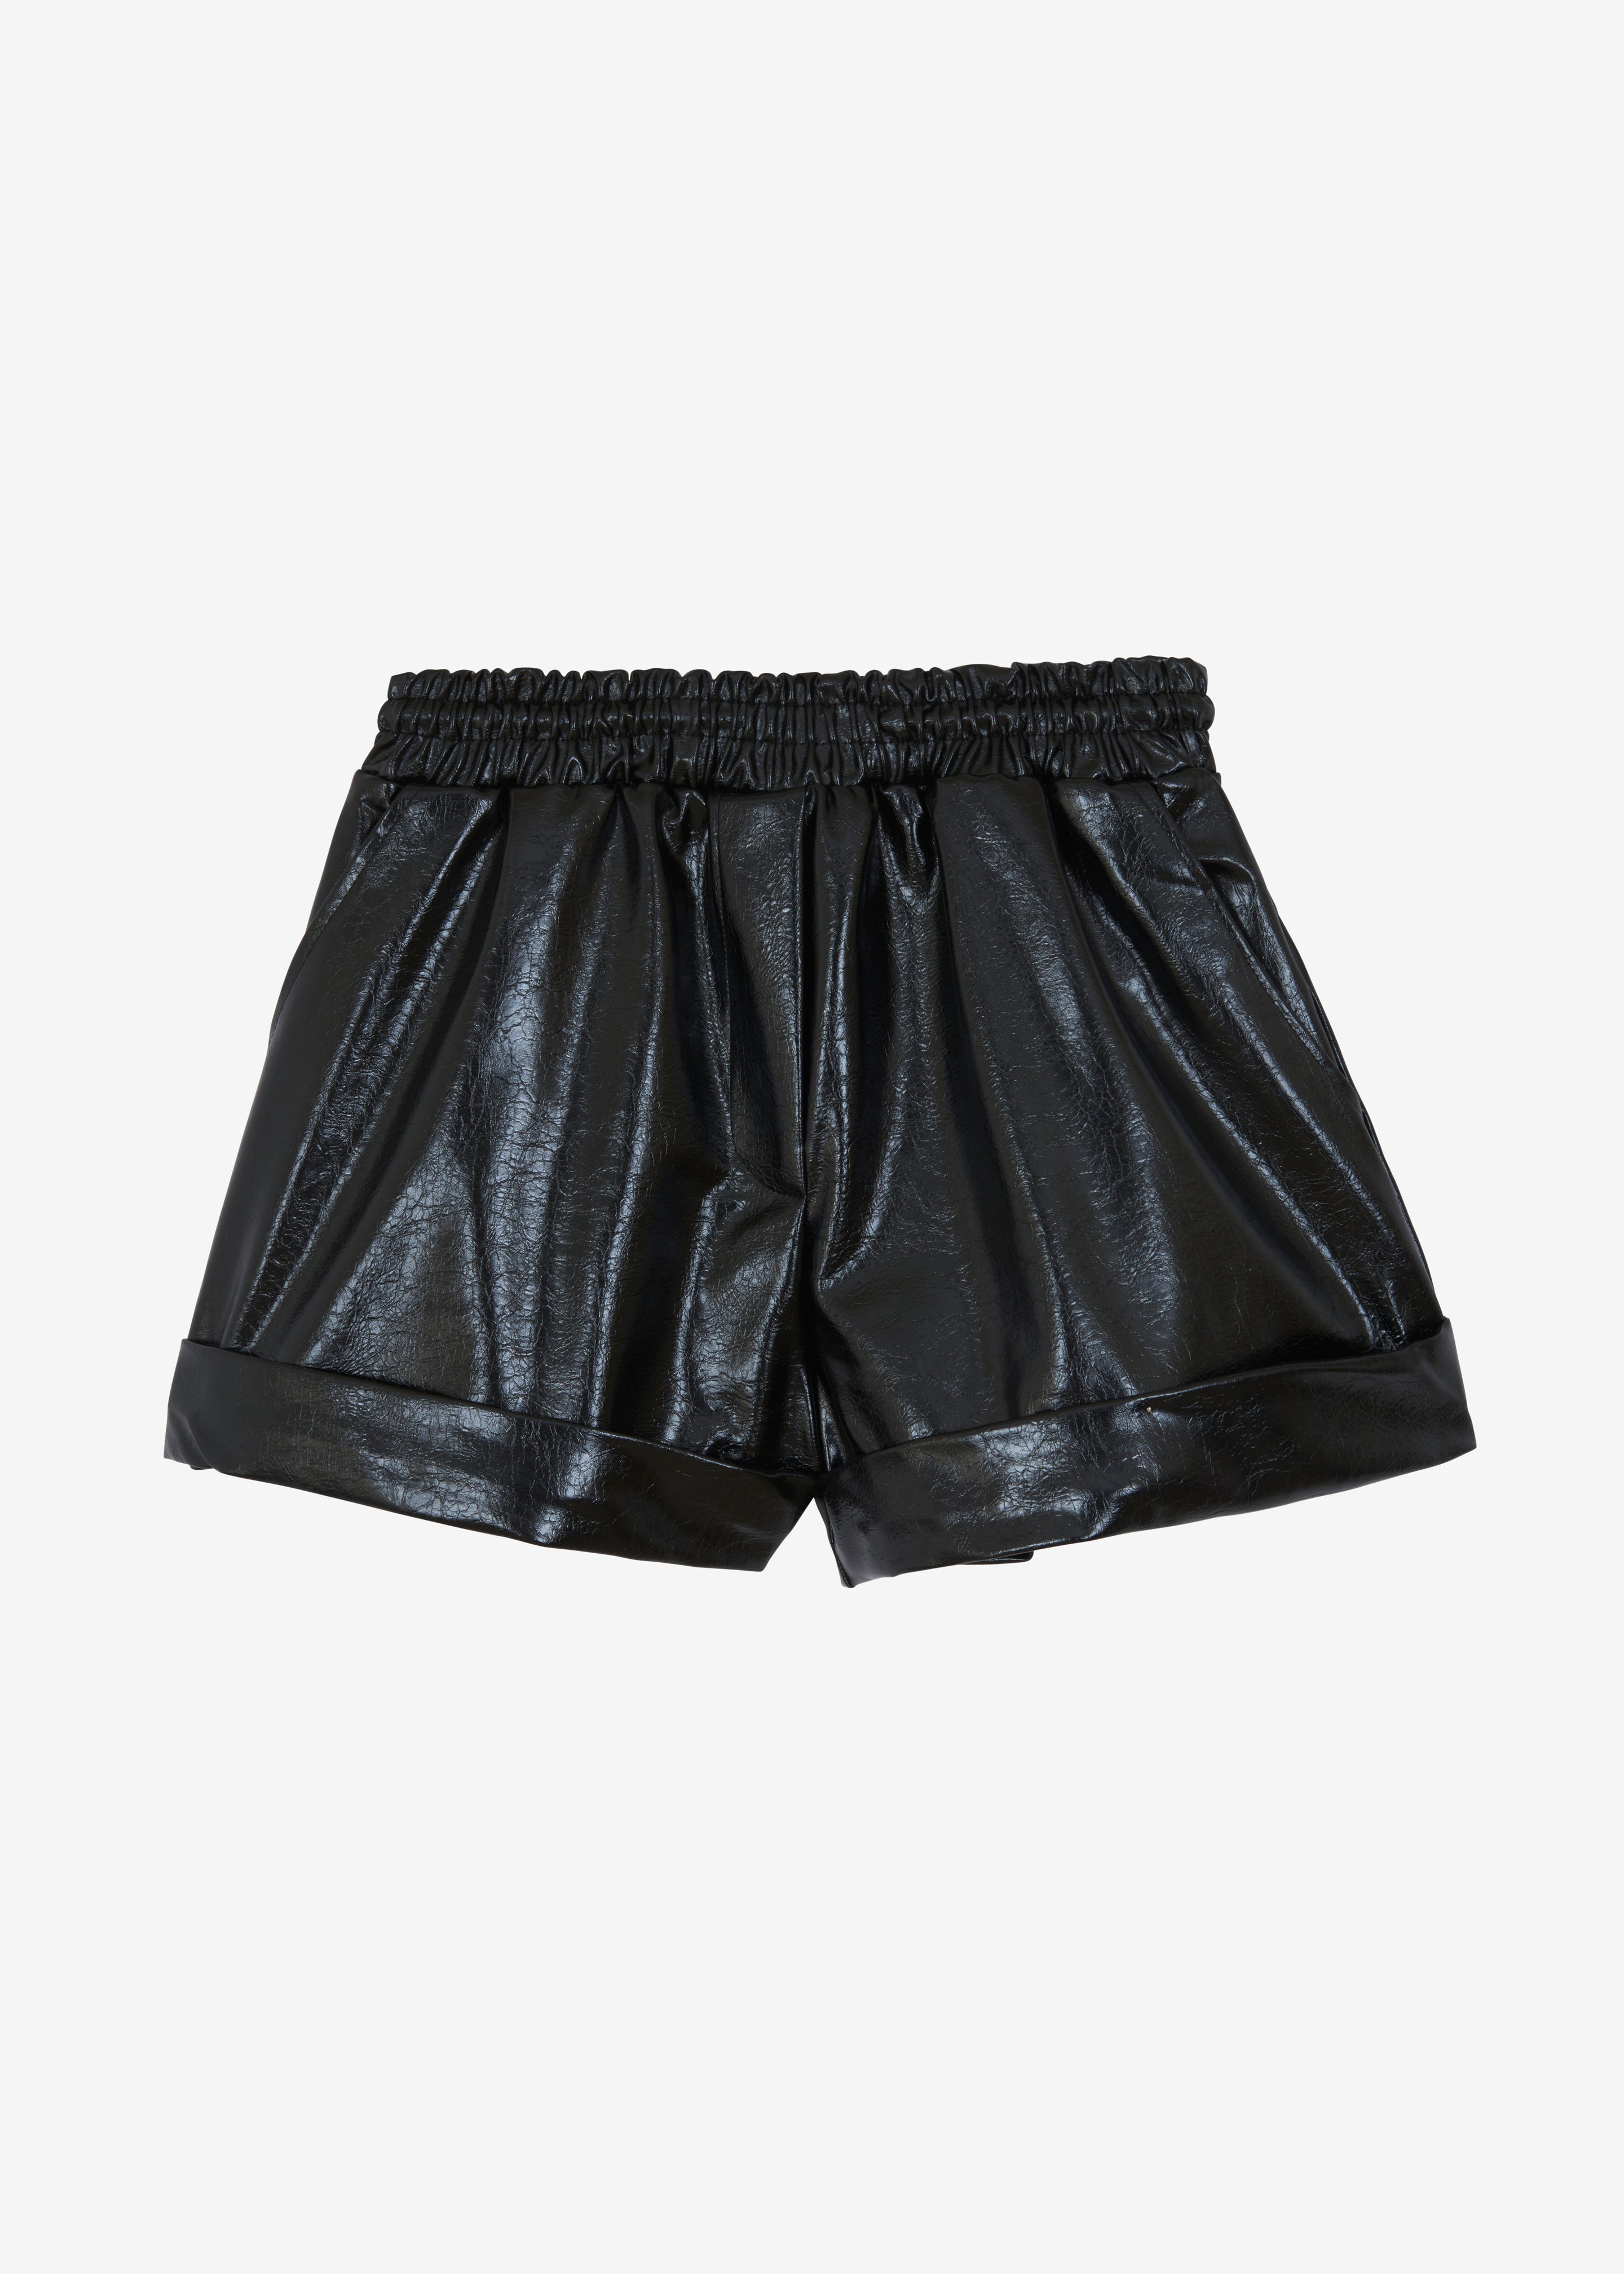 Kassy Faux Leather Shorts - Black - 7